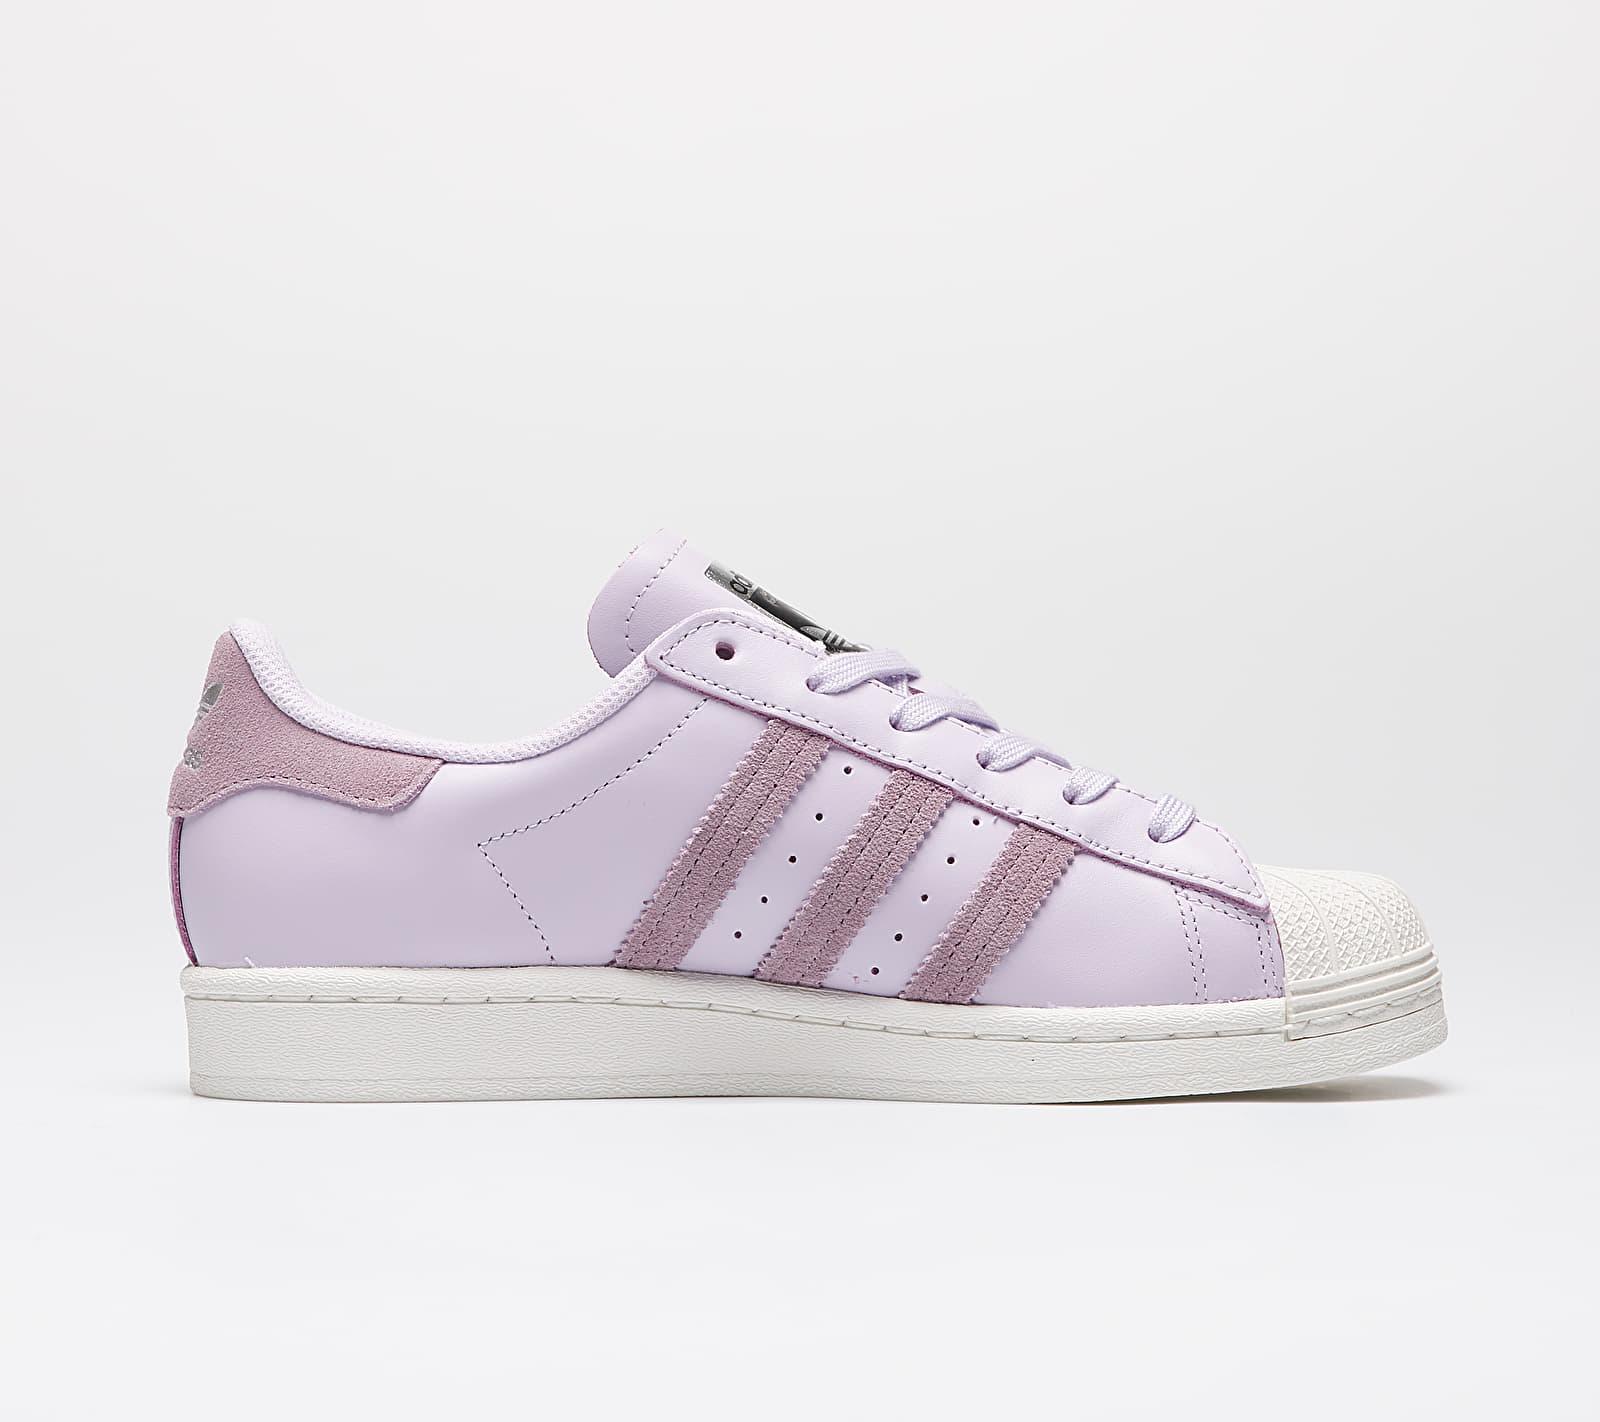 white and purple adidas